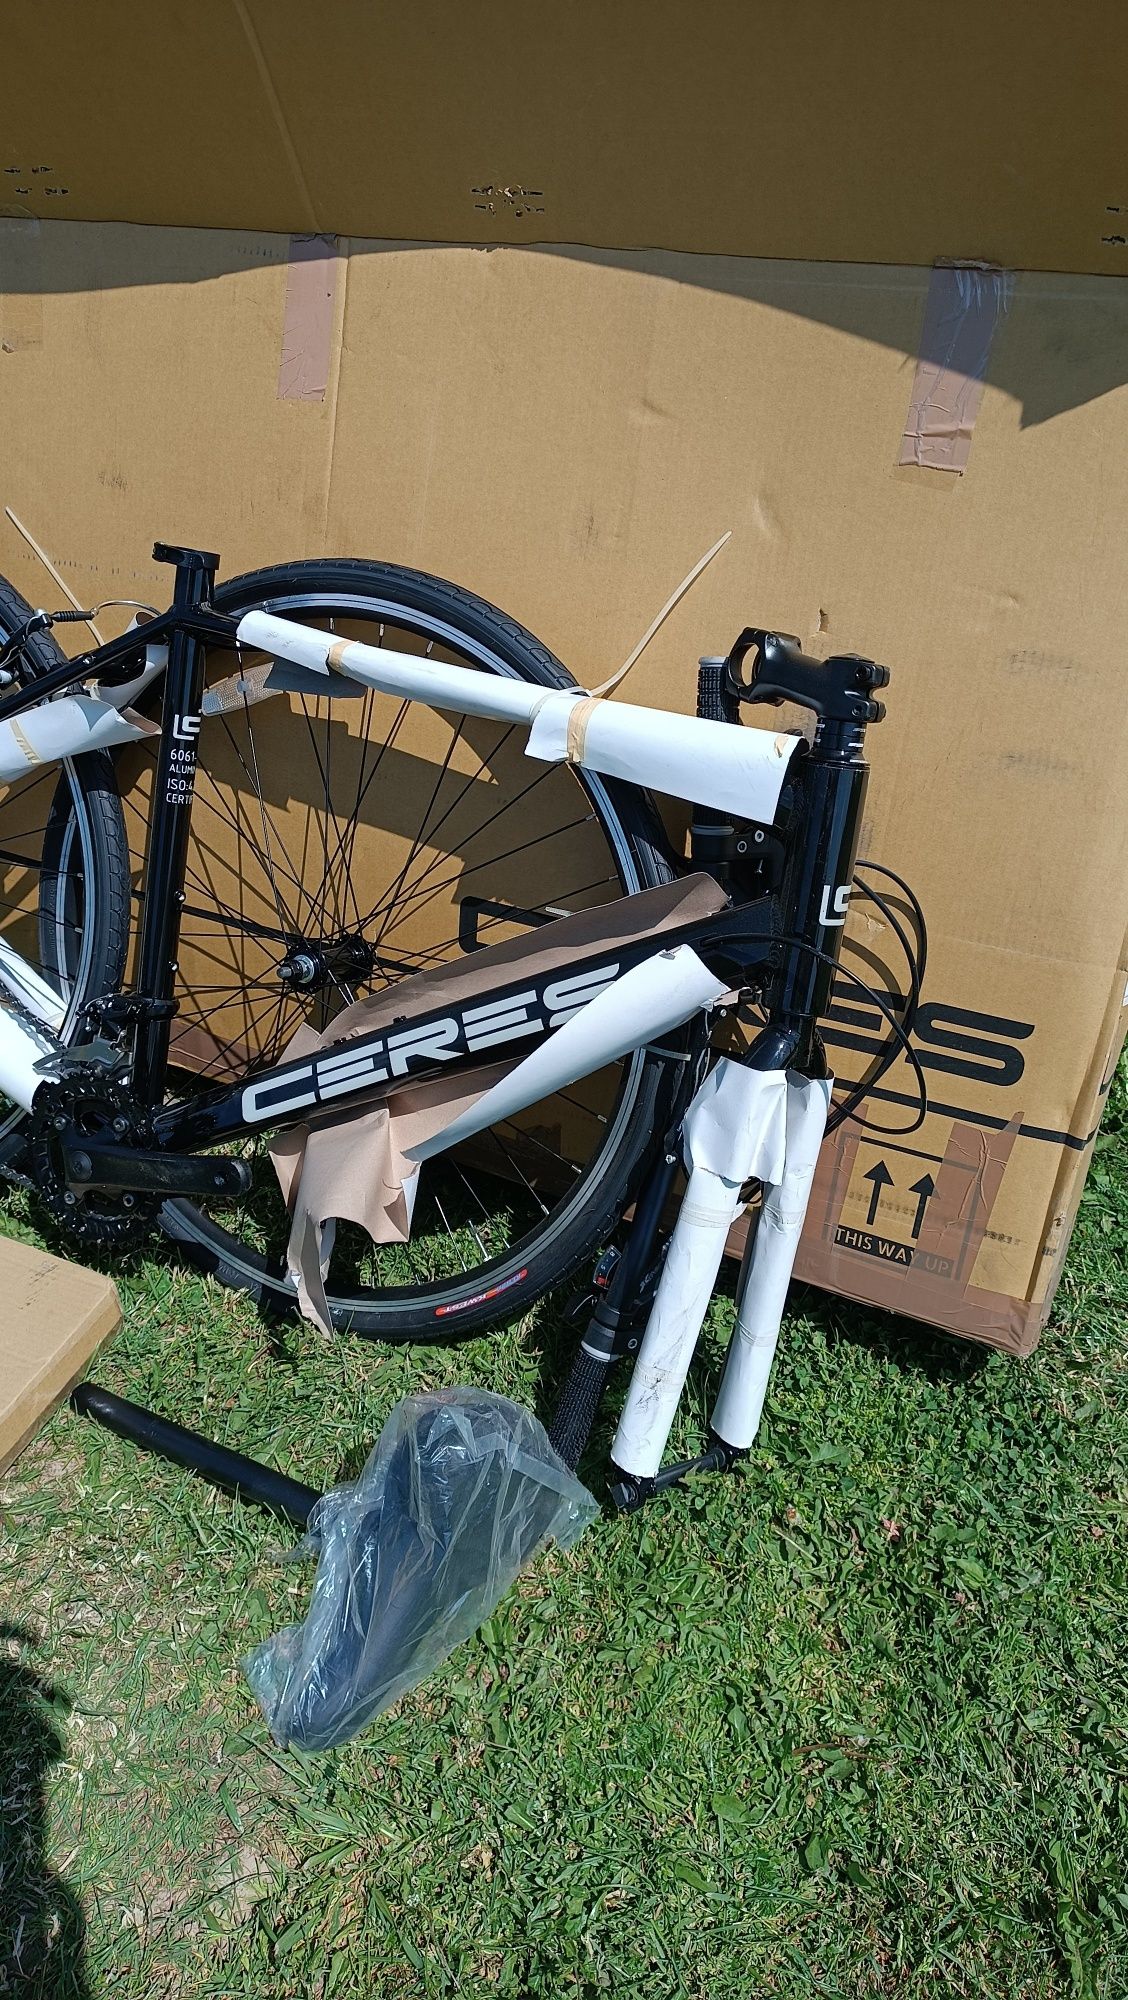 Crers ub .1 2021 hybrydowy aluminiowy rower meskii kola 28" rama L